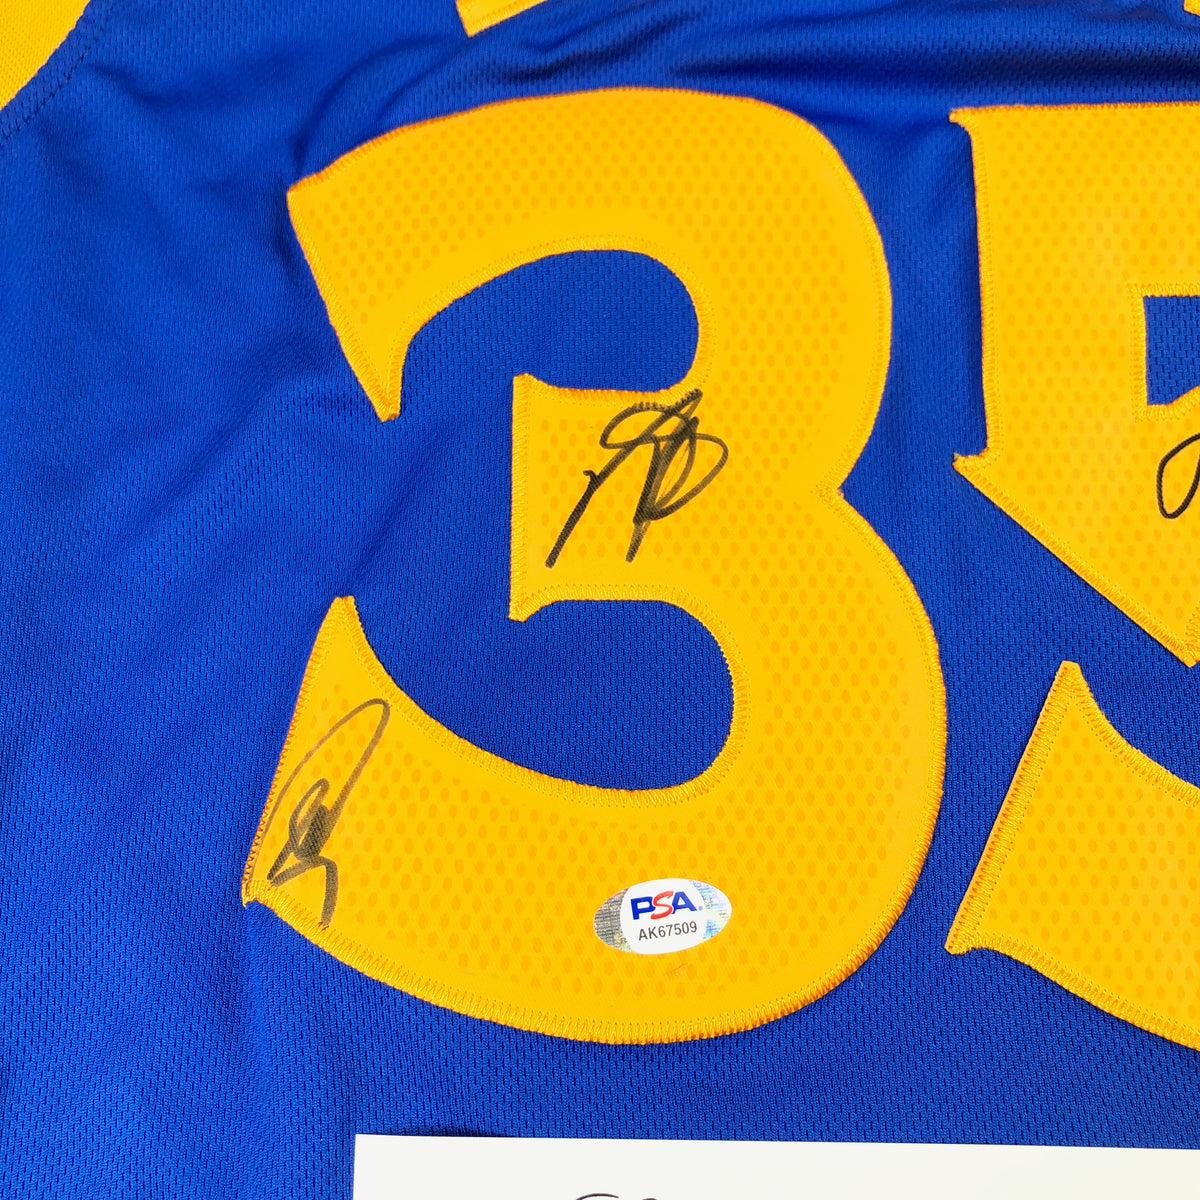 Stephen Curry Kevin Durant Steve Kerr signed jersey PSA/DNA Autographe –  Golden State Memorabilia